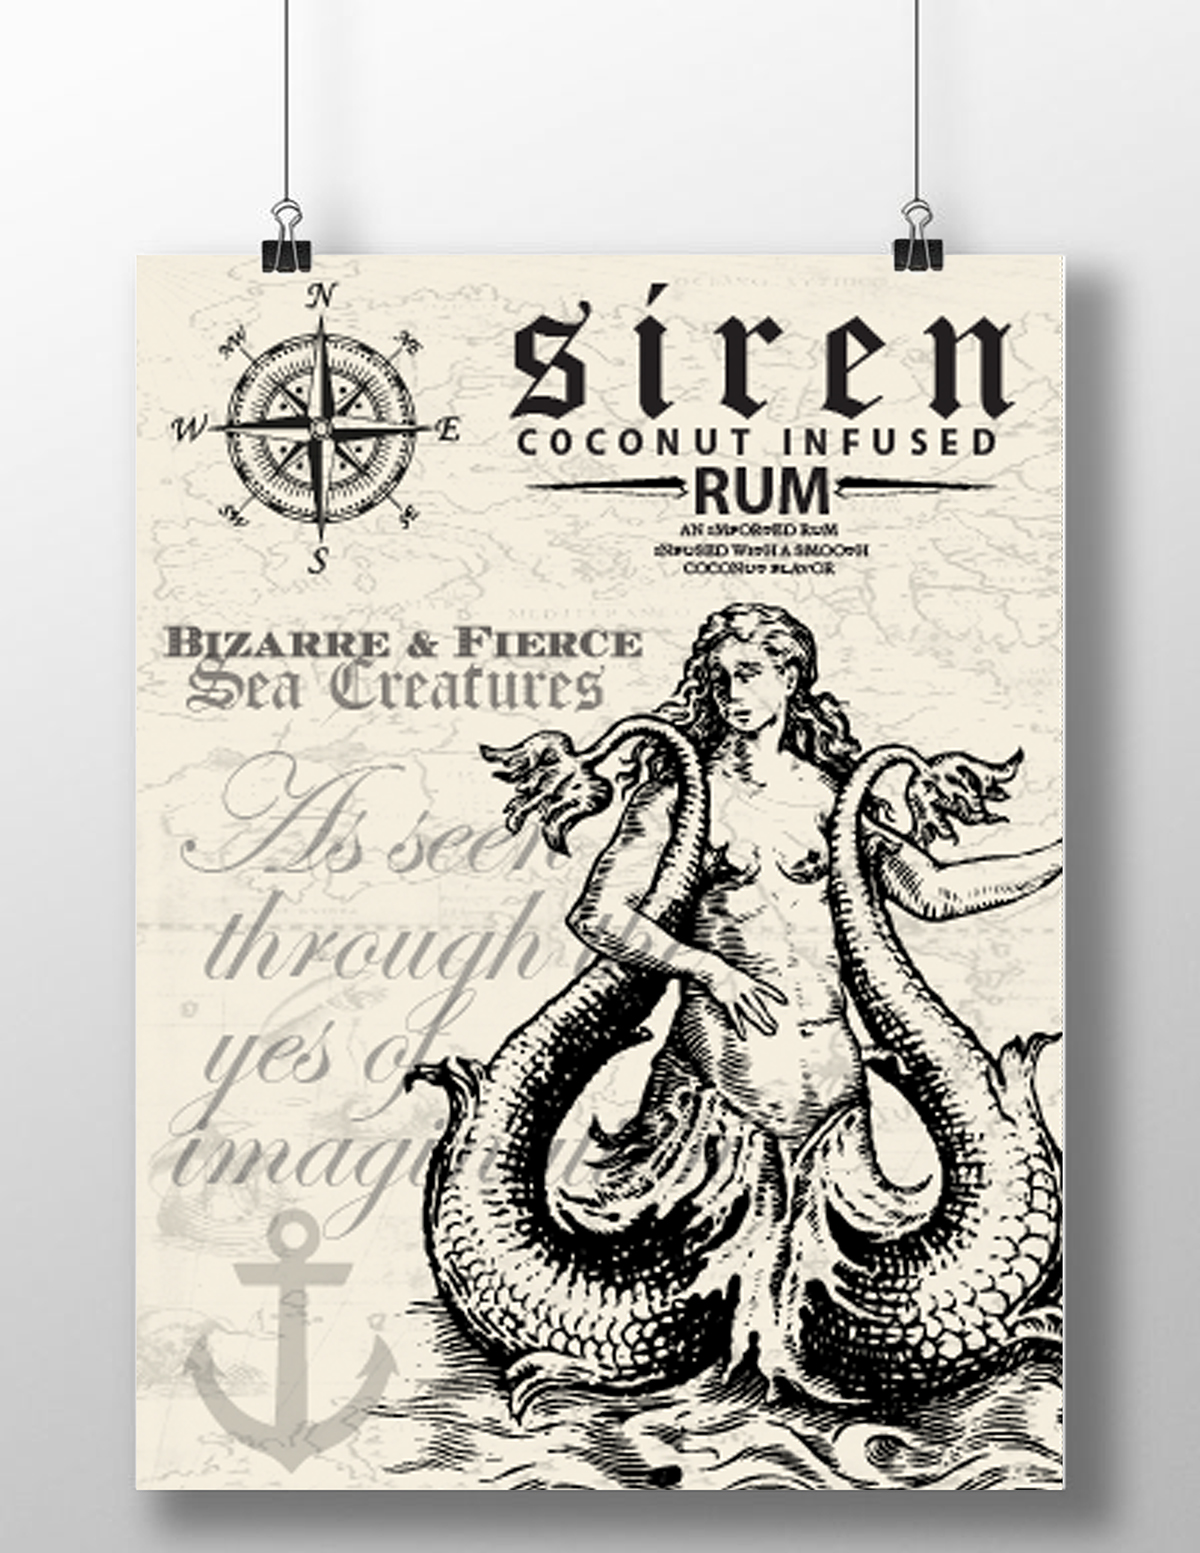 liquor kraken stout poster series map creatures graphic design salior sea nautical